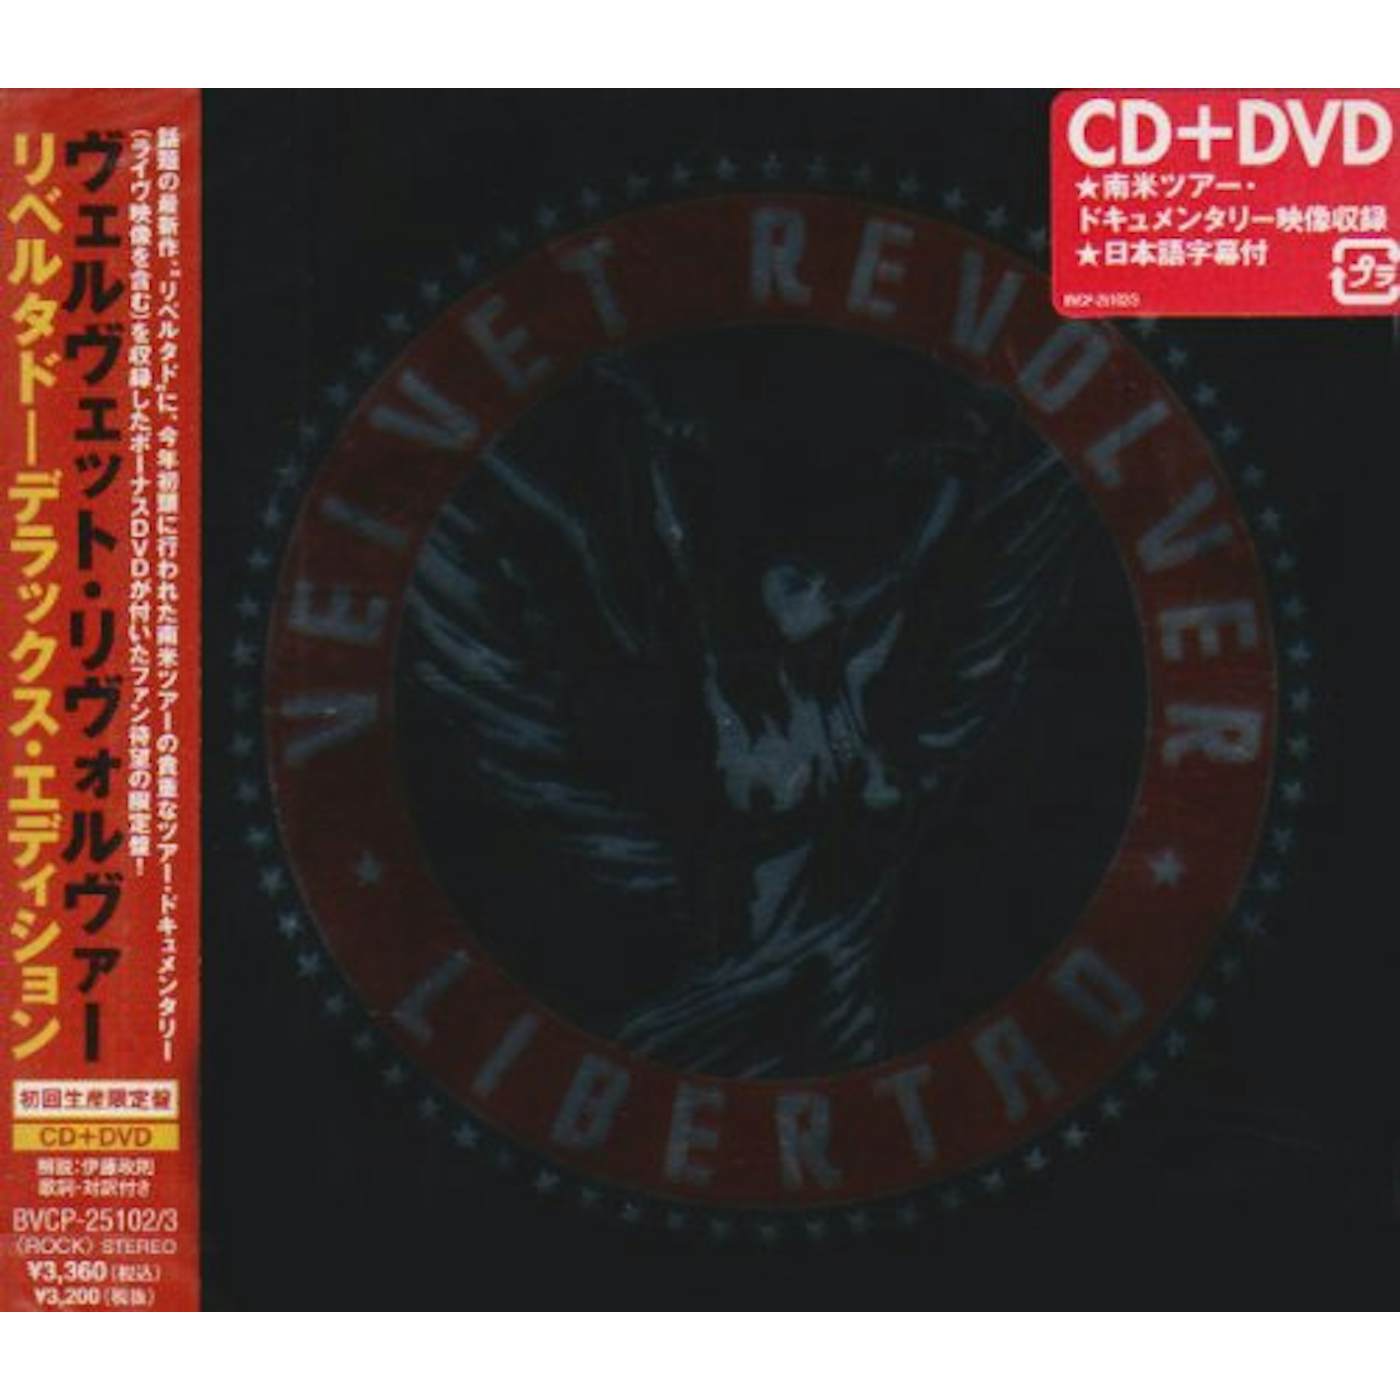 Velvet Revolver LIBERTAD-DELUXE EDITION CD